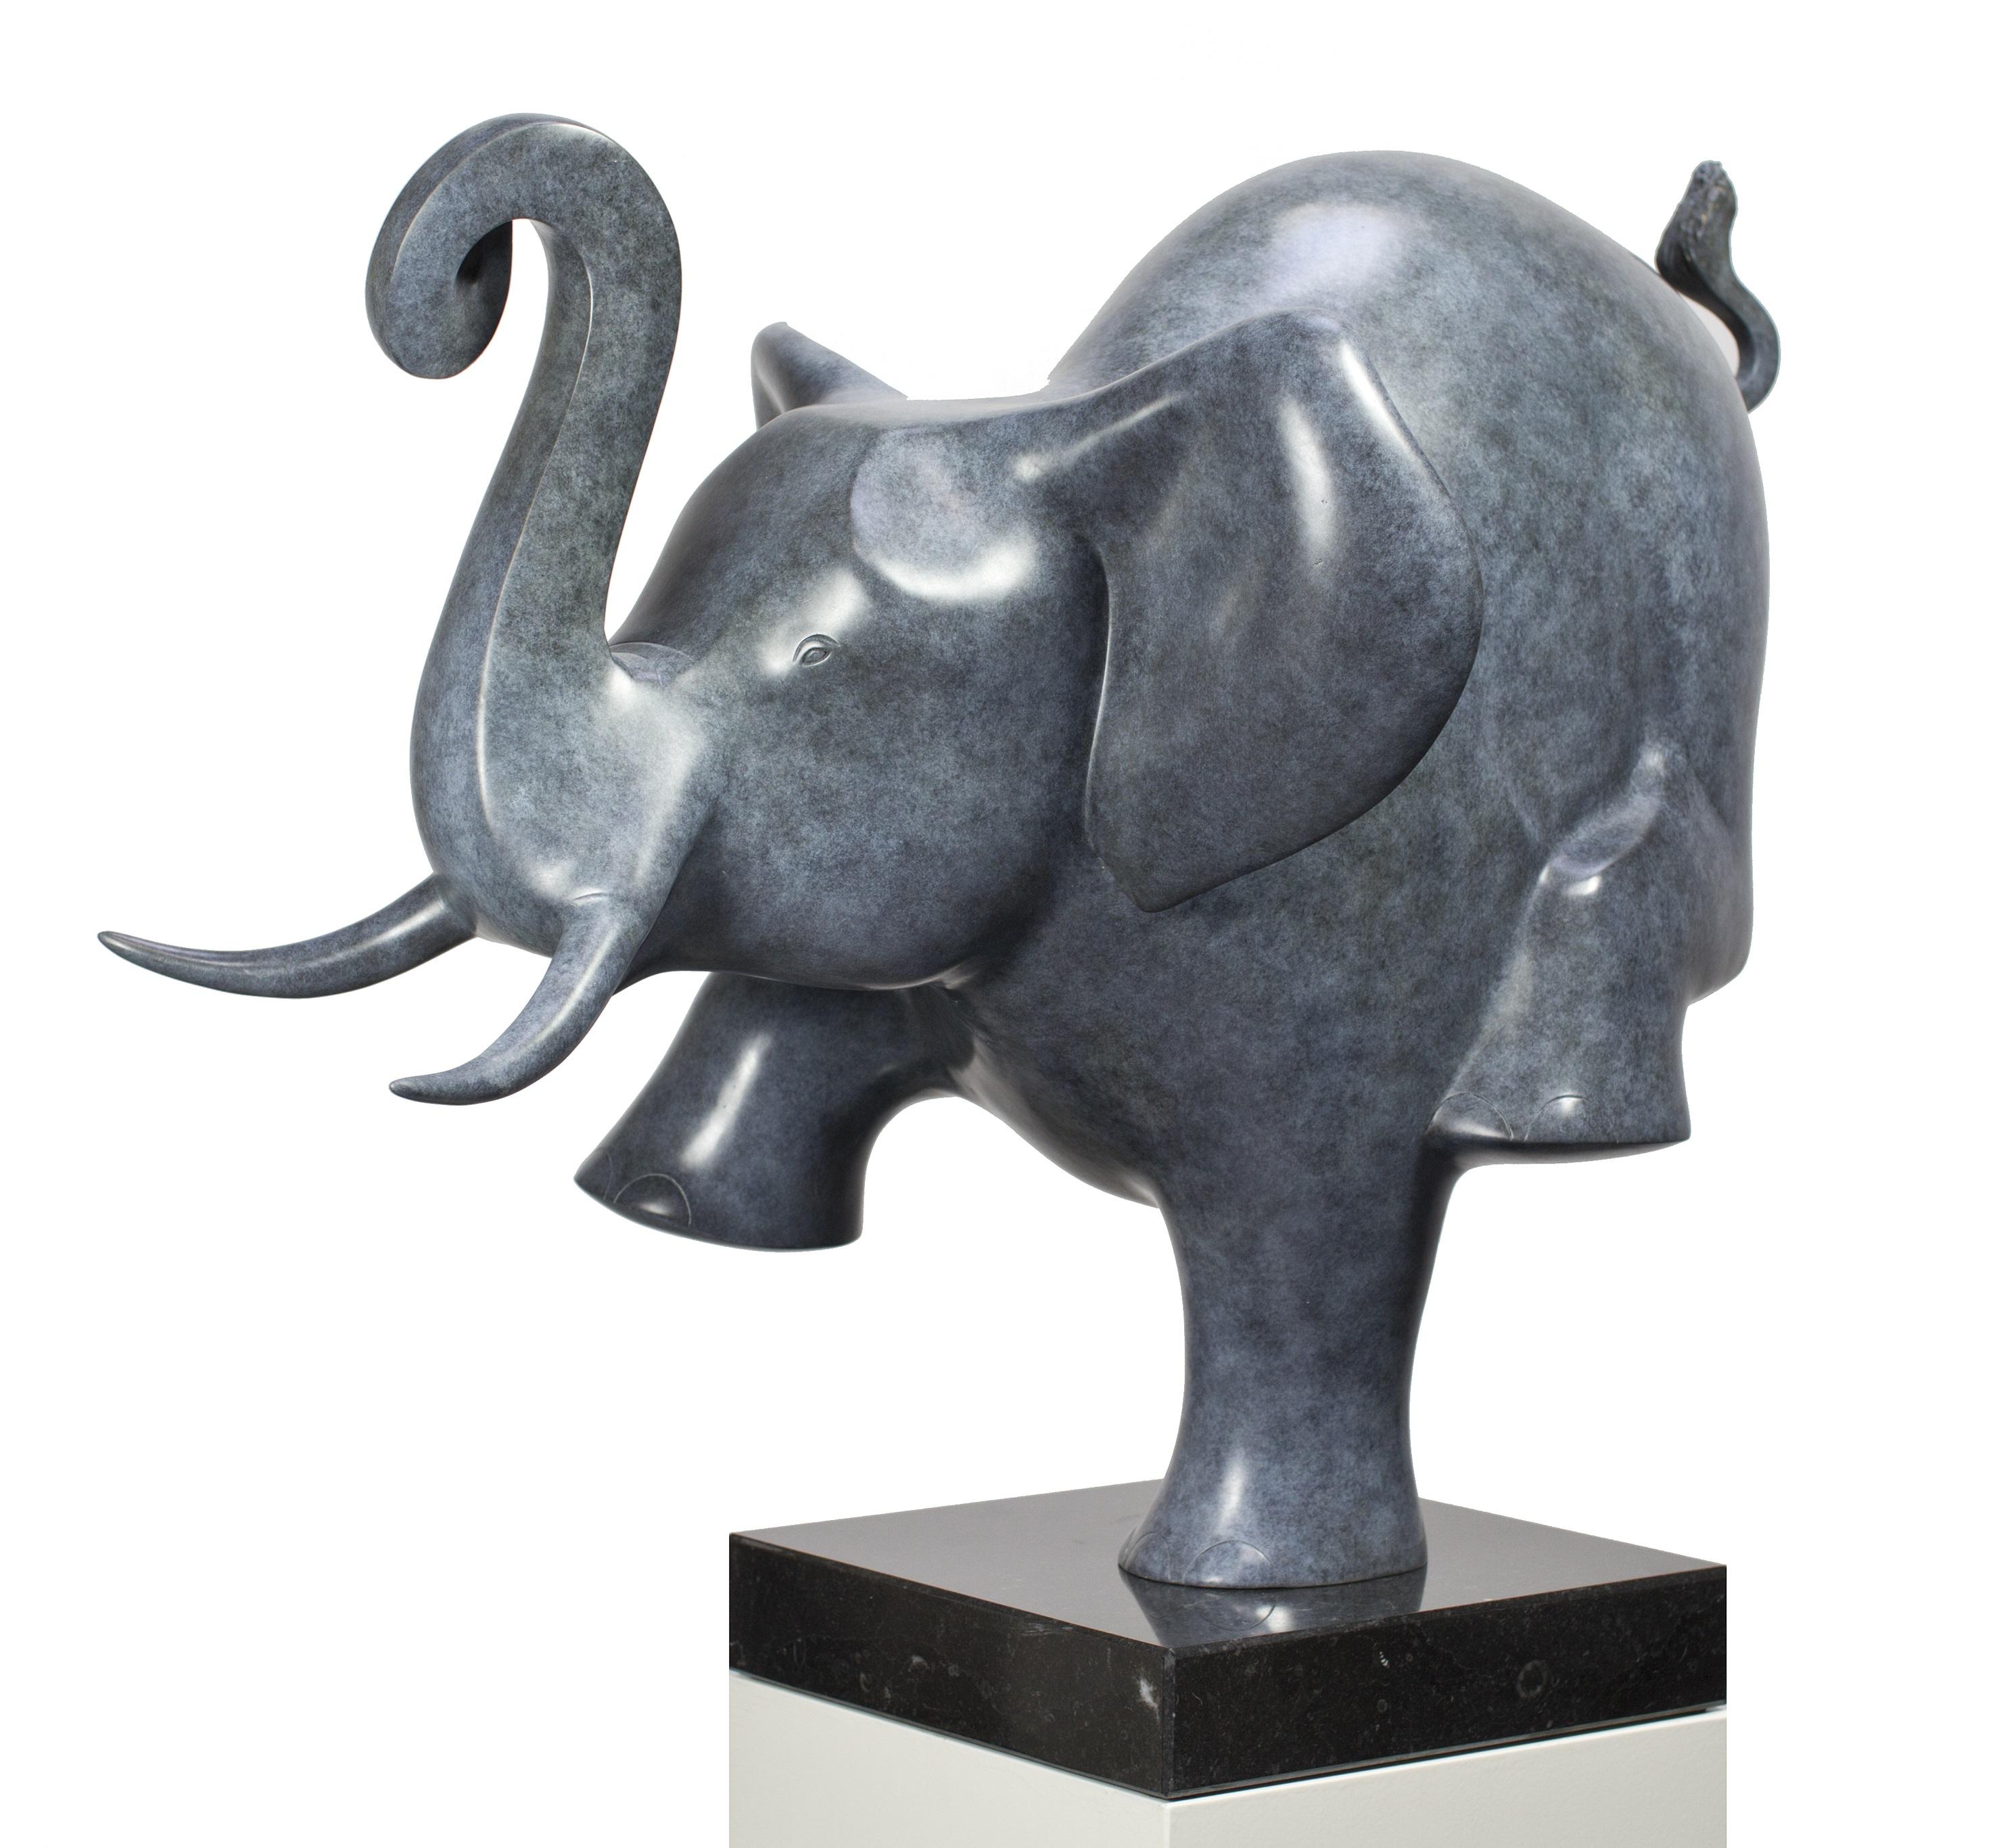 Evert den Hartog Figurative Sculpture - Dansende Olifant no.2  Dancing Elephant Bronze Sculpture Contemporary In Stock